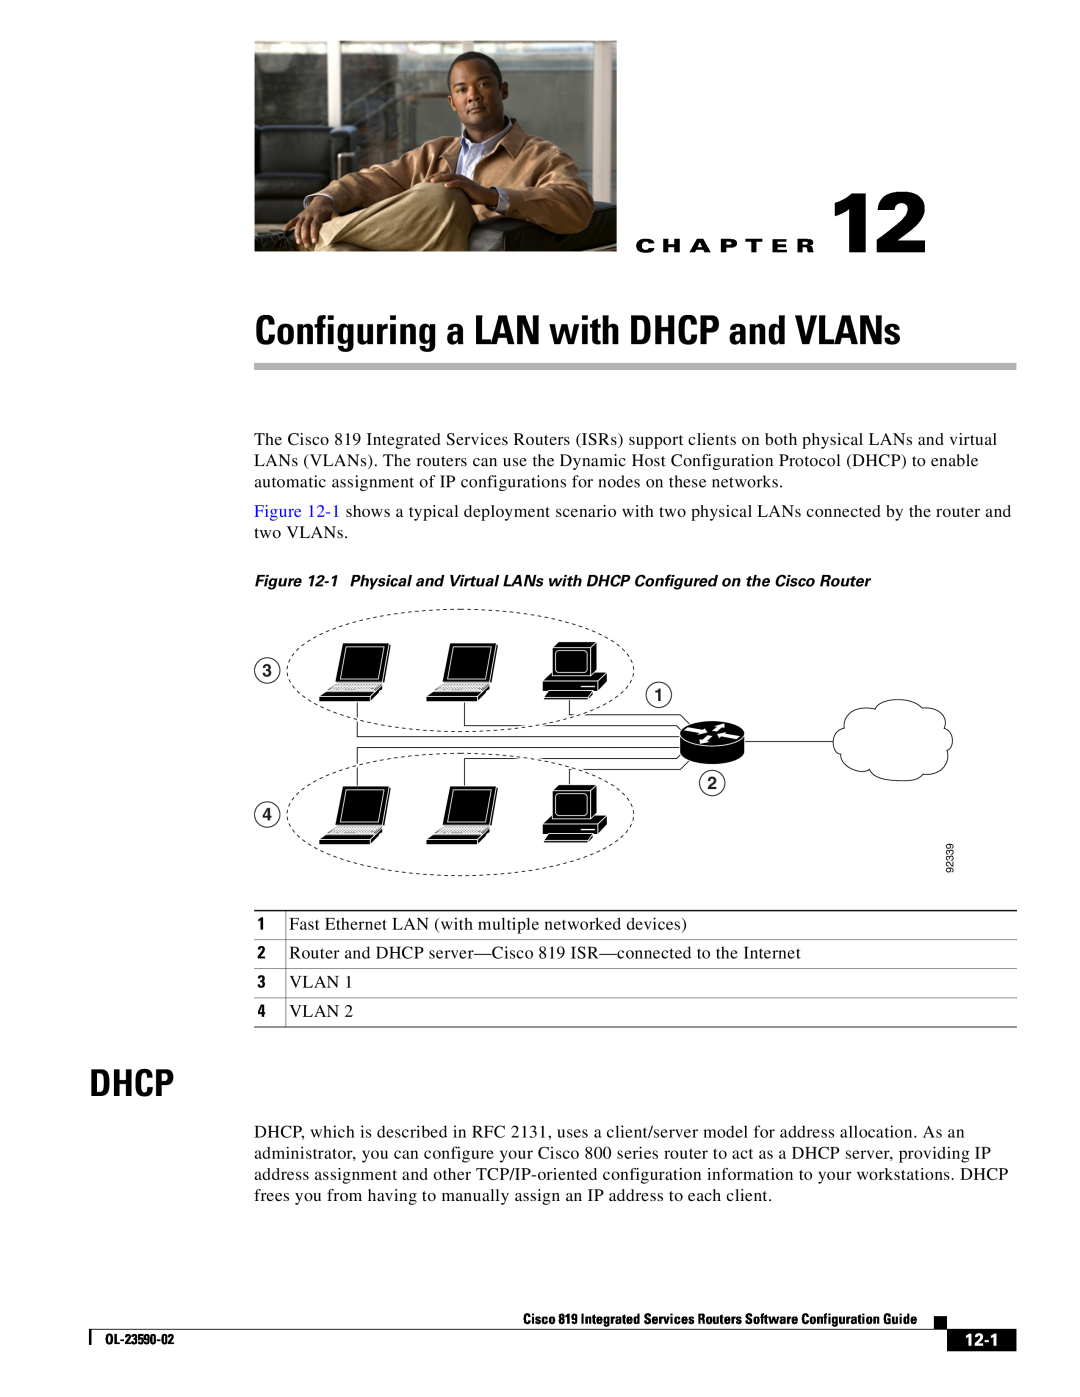 Cisco Systems C819HG4GVK9, C819GUK9 manual Configuring a LAN with DHCP and VLANs, Dhcp, 12-1, C H A P T E R 